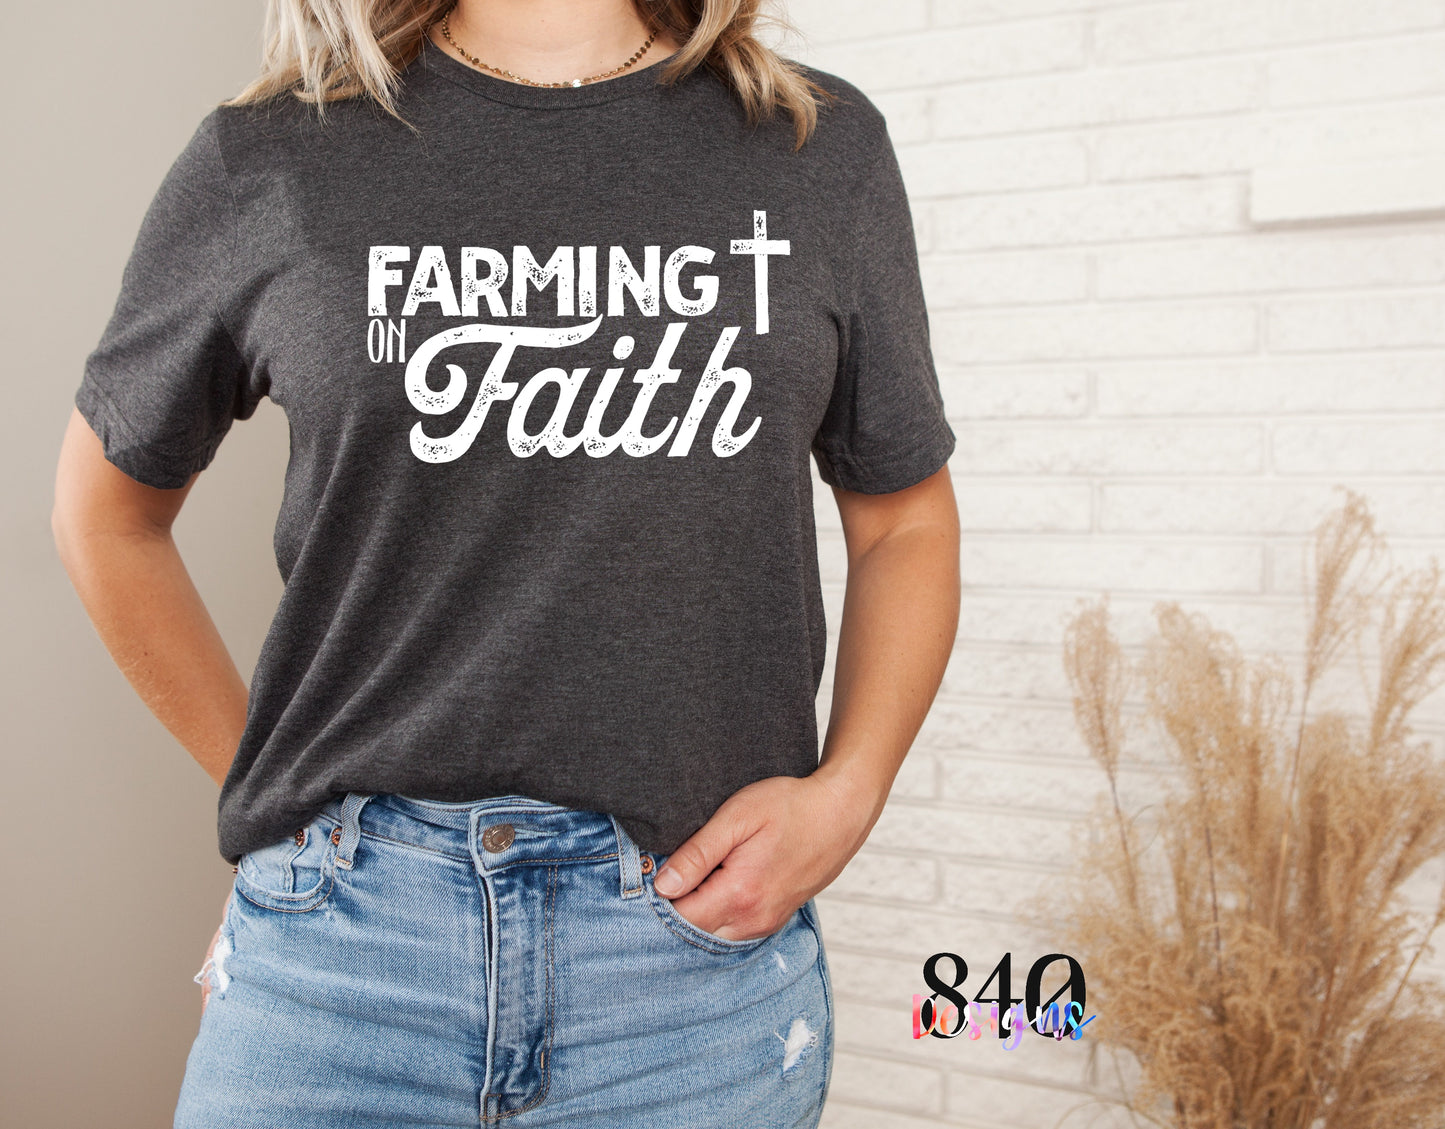 Farming On Faith - 840 EXCLUSIVE